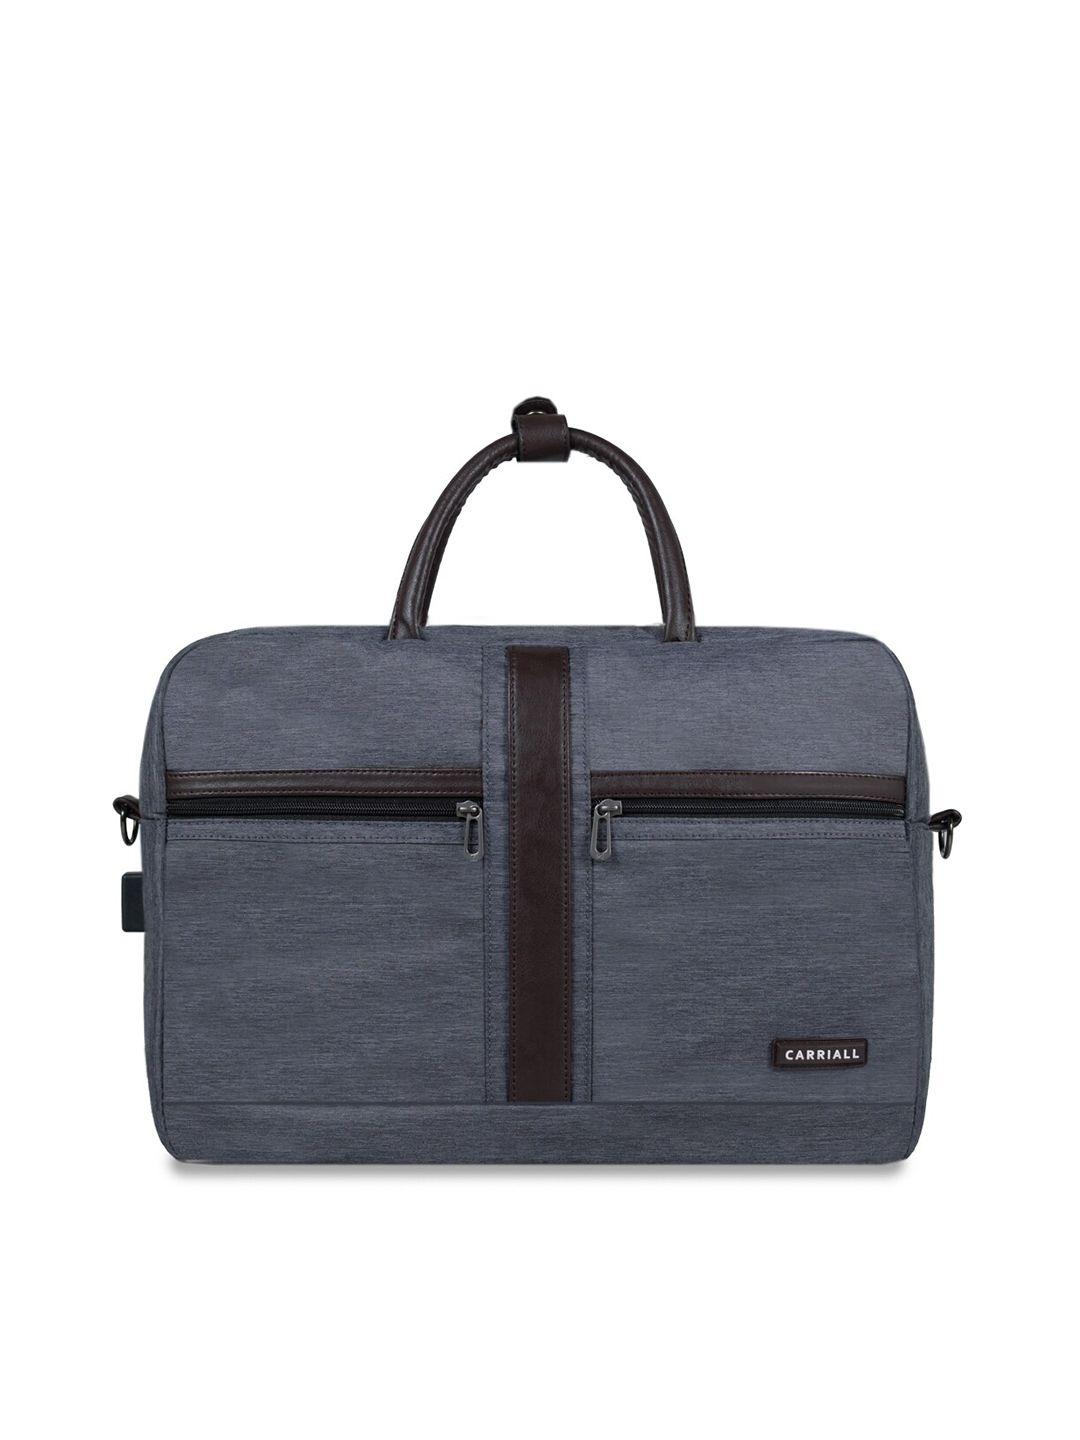 carriall unisex grey & black laptop  messenger bag